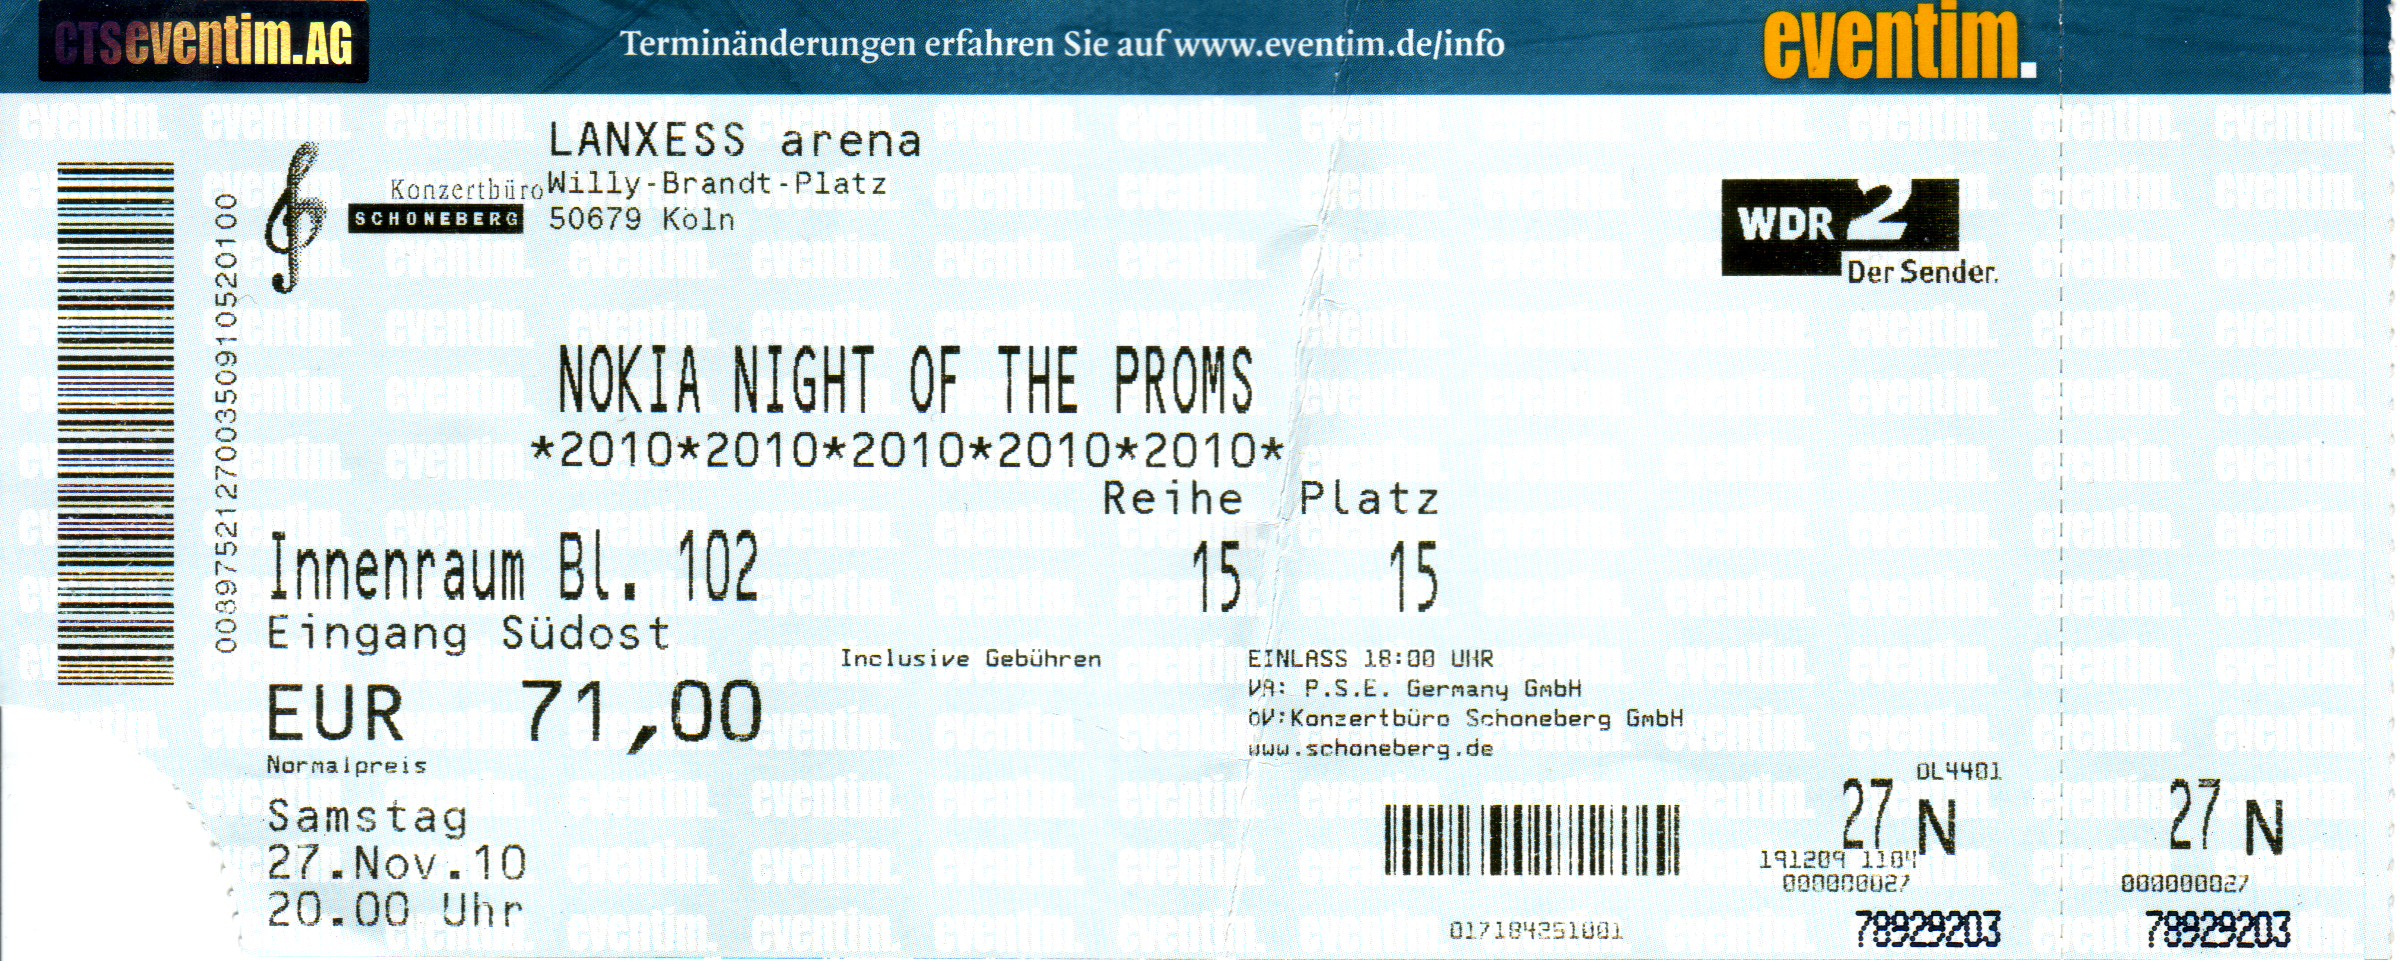 27.11.2010 - NOKIA Night of the Proms @Köln/Lanxess-Arena